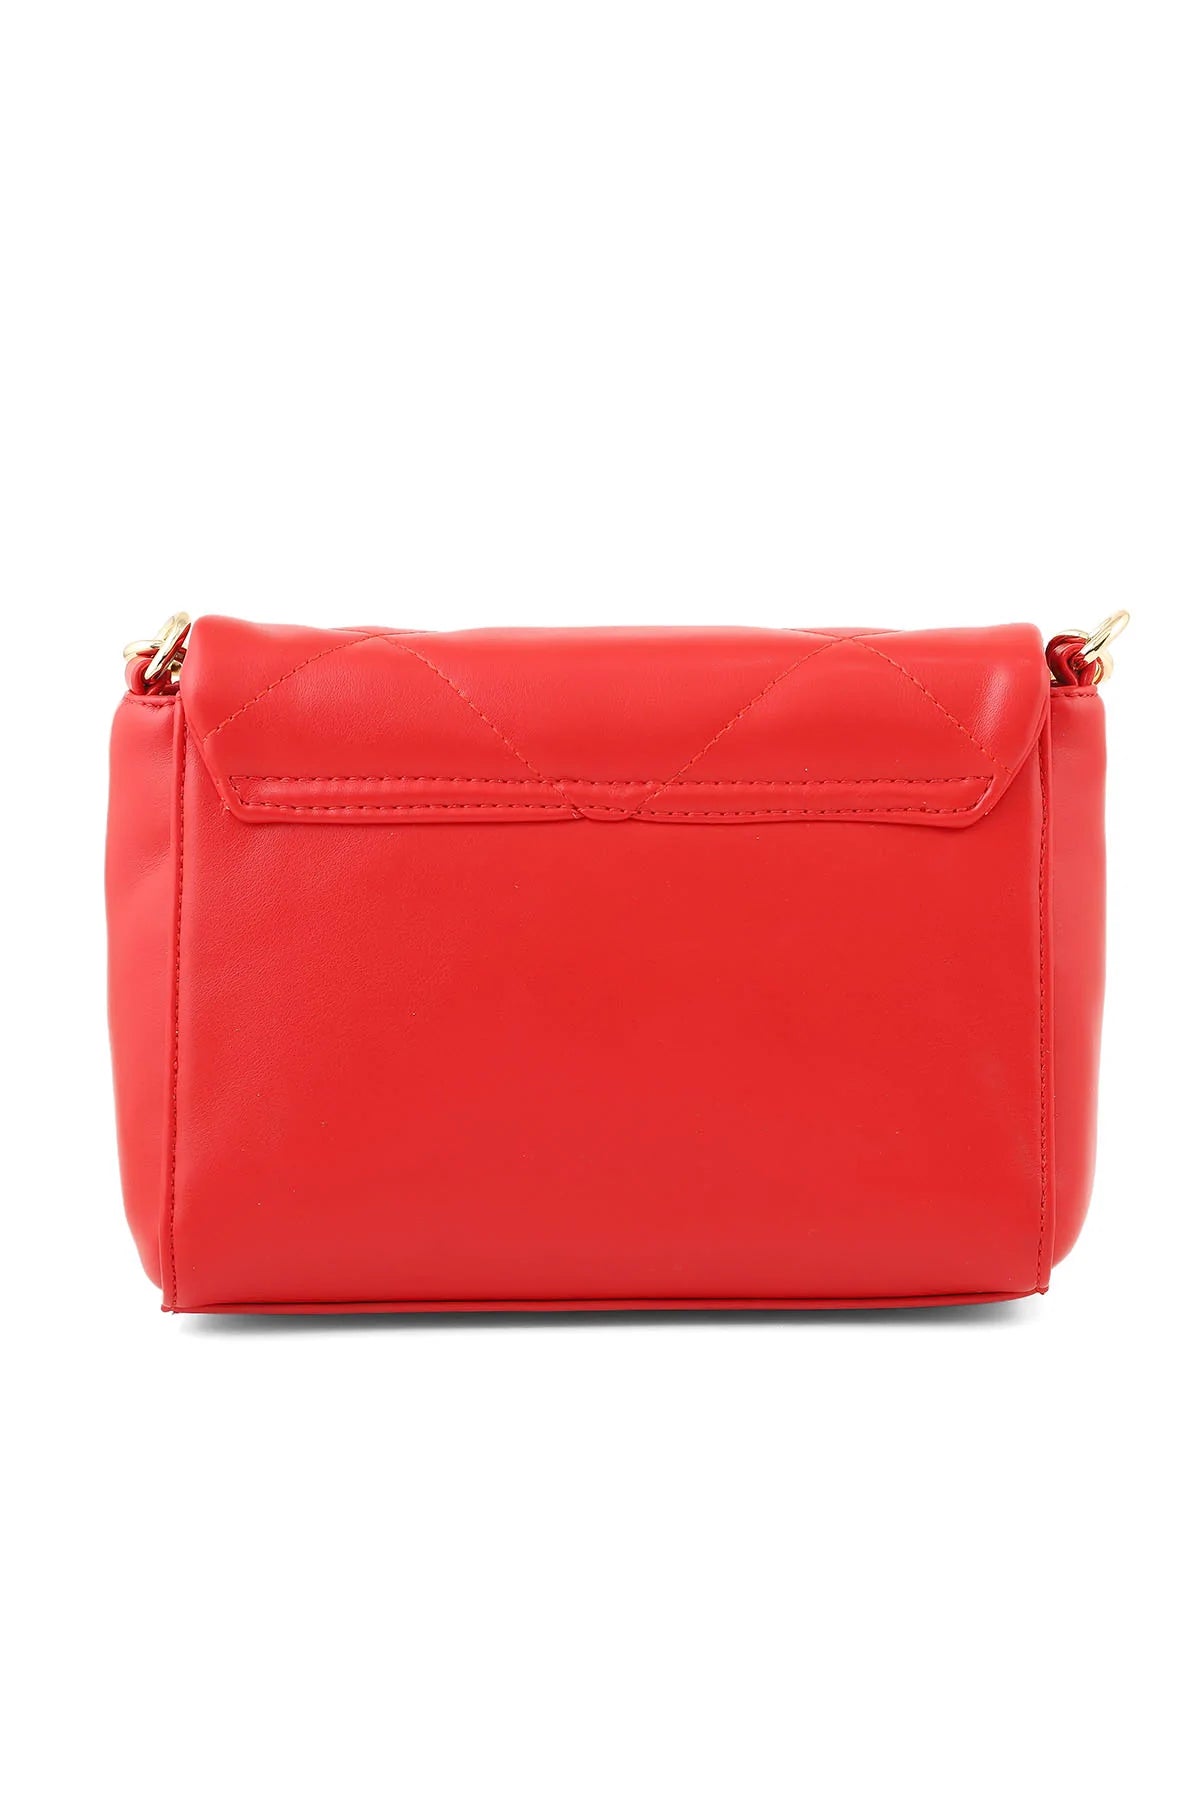 Cross Shoulder Bags B15026-Red